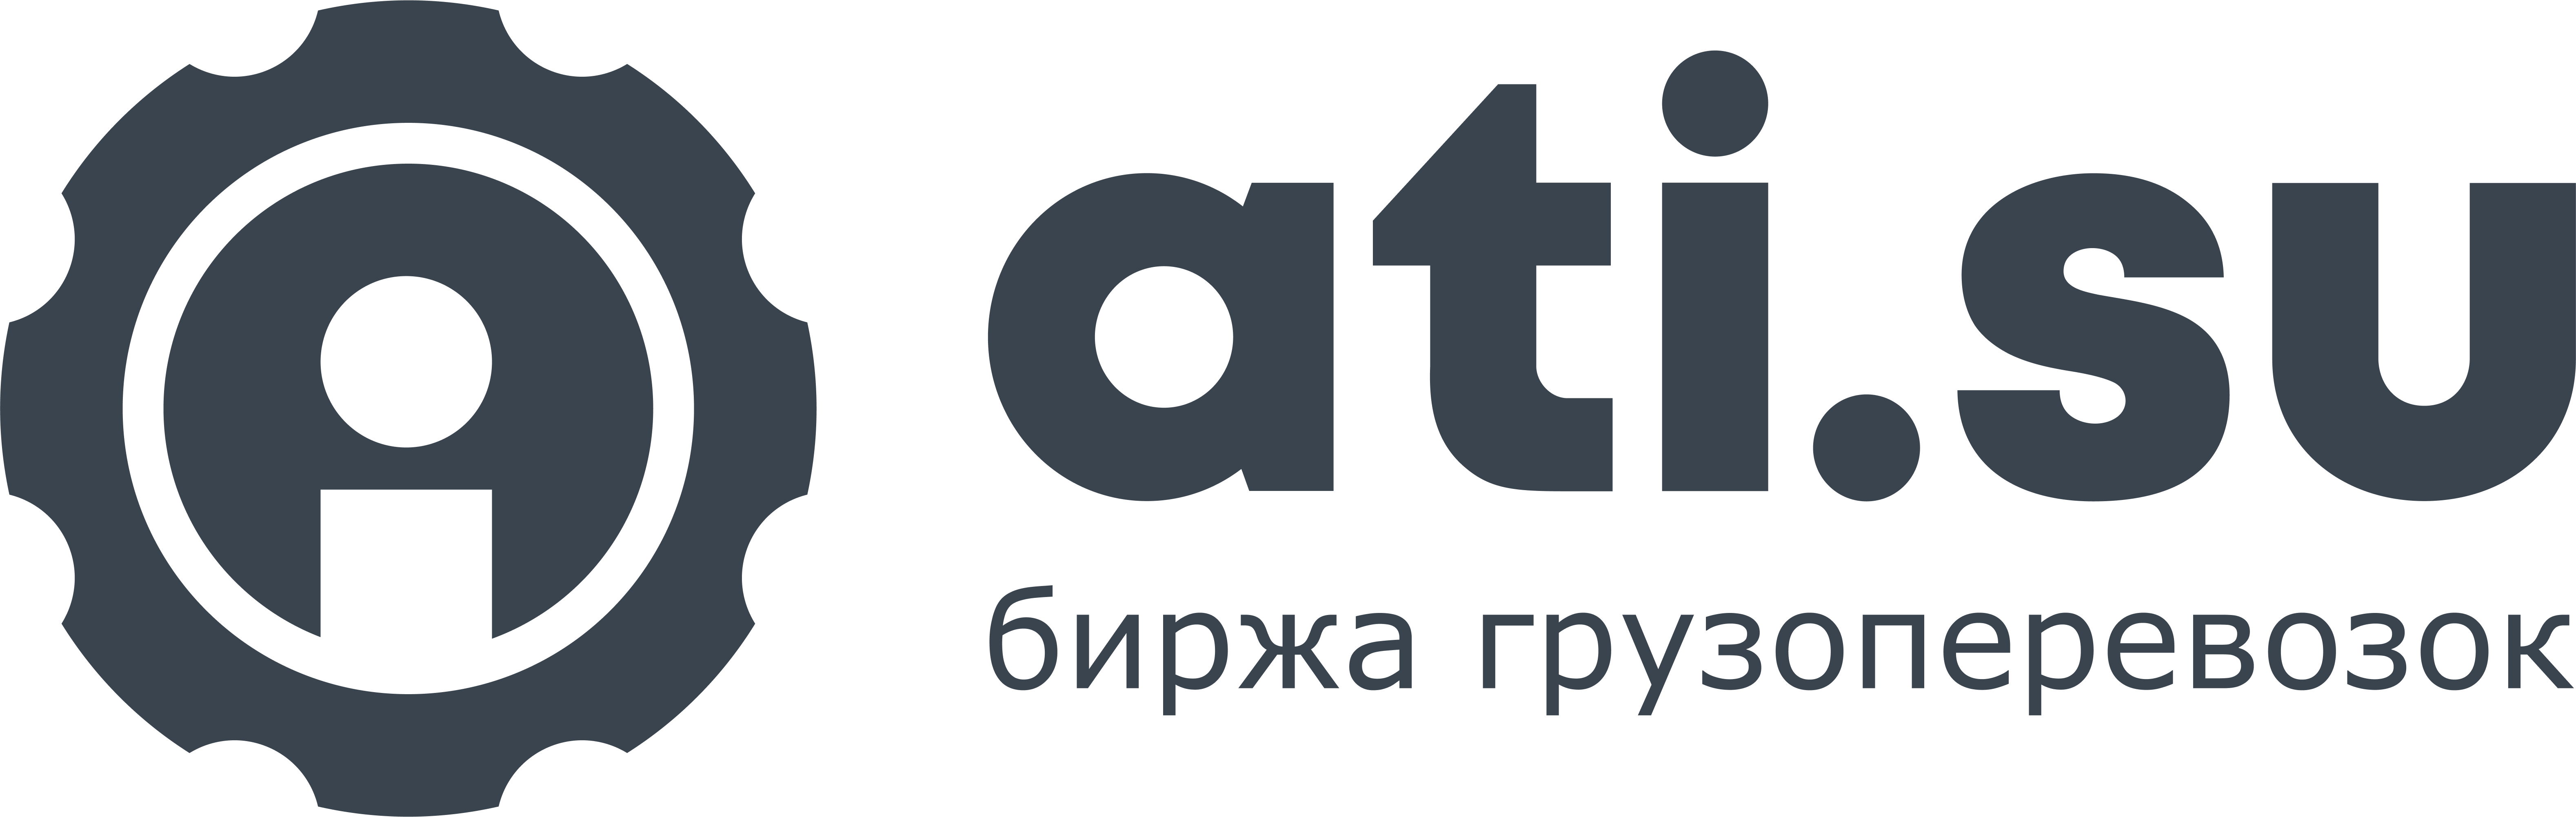 Айти грузоперевозочный сайт. Логотип. Логотип Су. ATI su лого. ATI грузоперевозки.